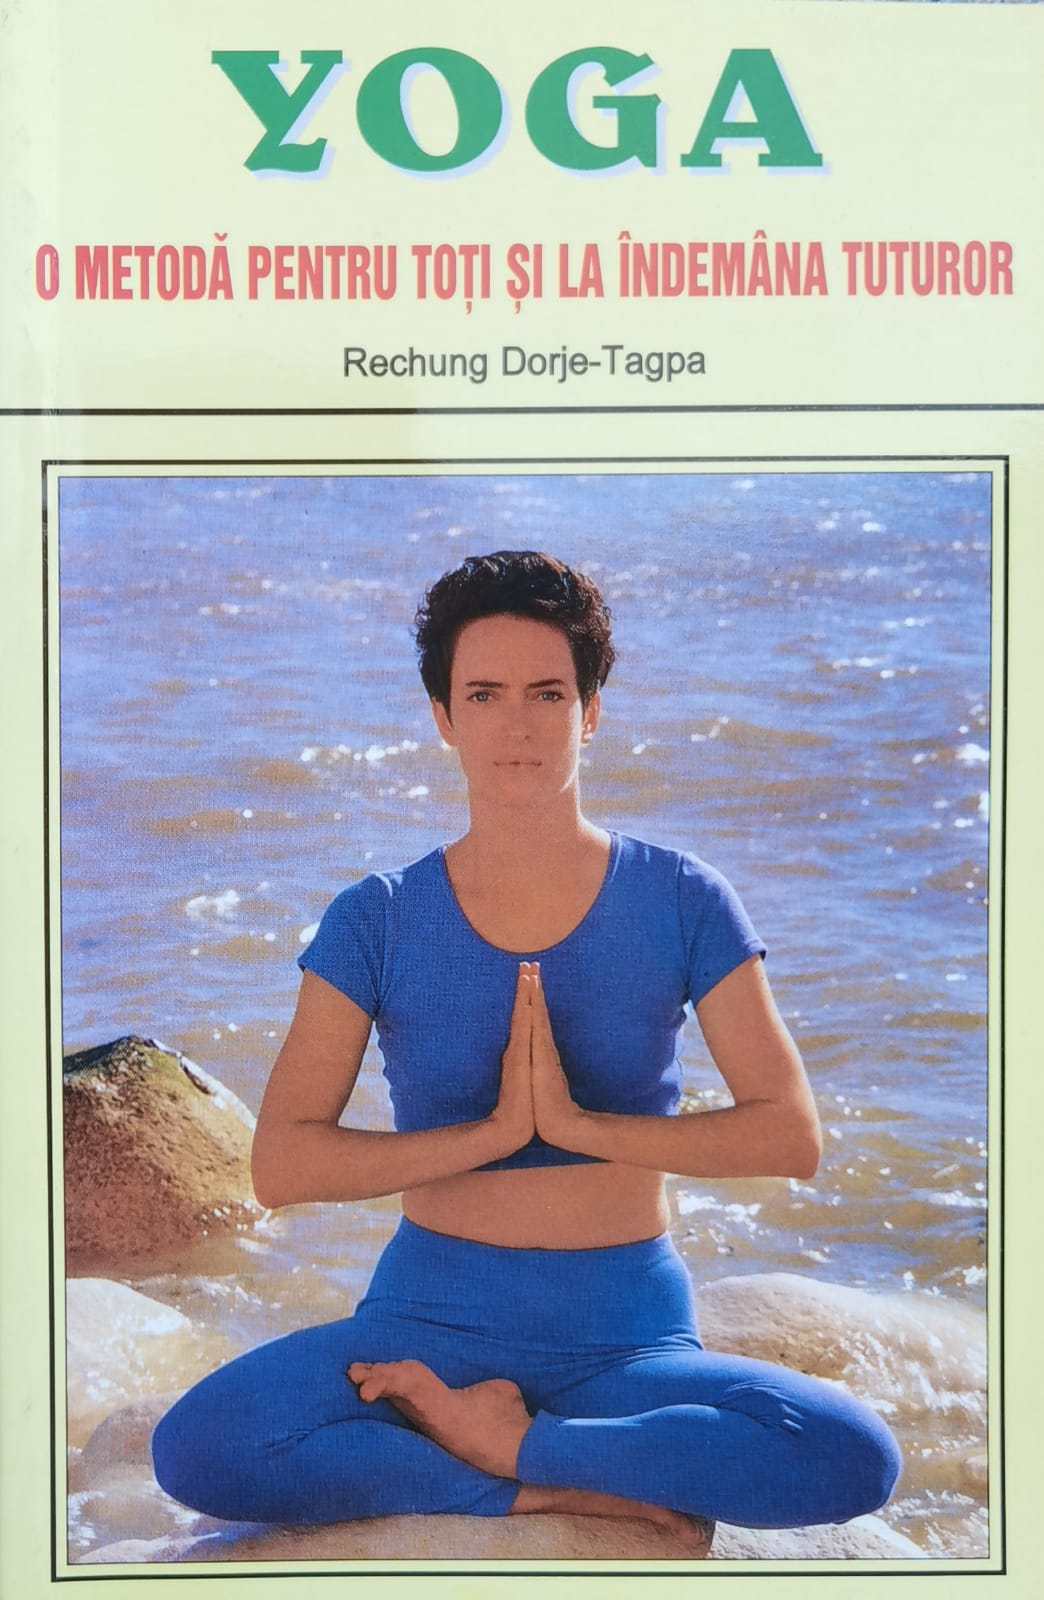 yoga o metoda pentru toti si la indemana tuturor                                                     r. dorje-tagpa                                                                                      